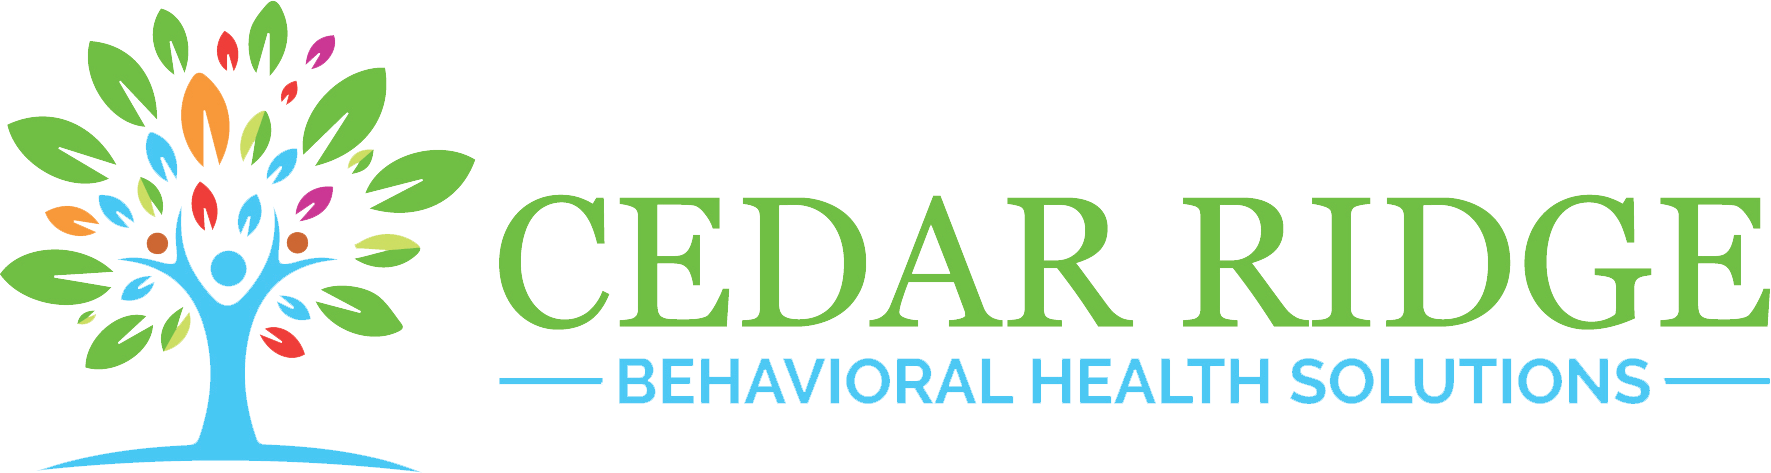 Cedar Ridge Behavioral Health Solutions